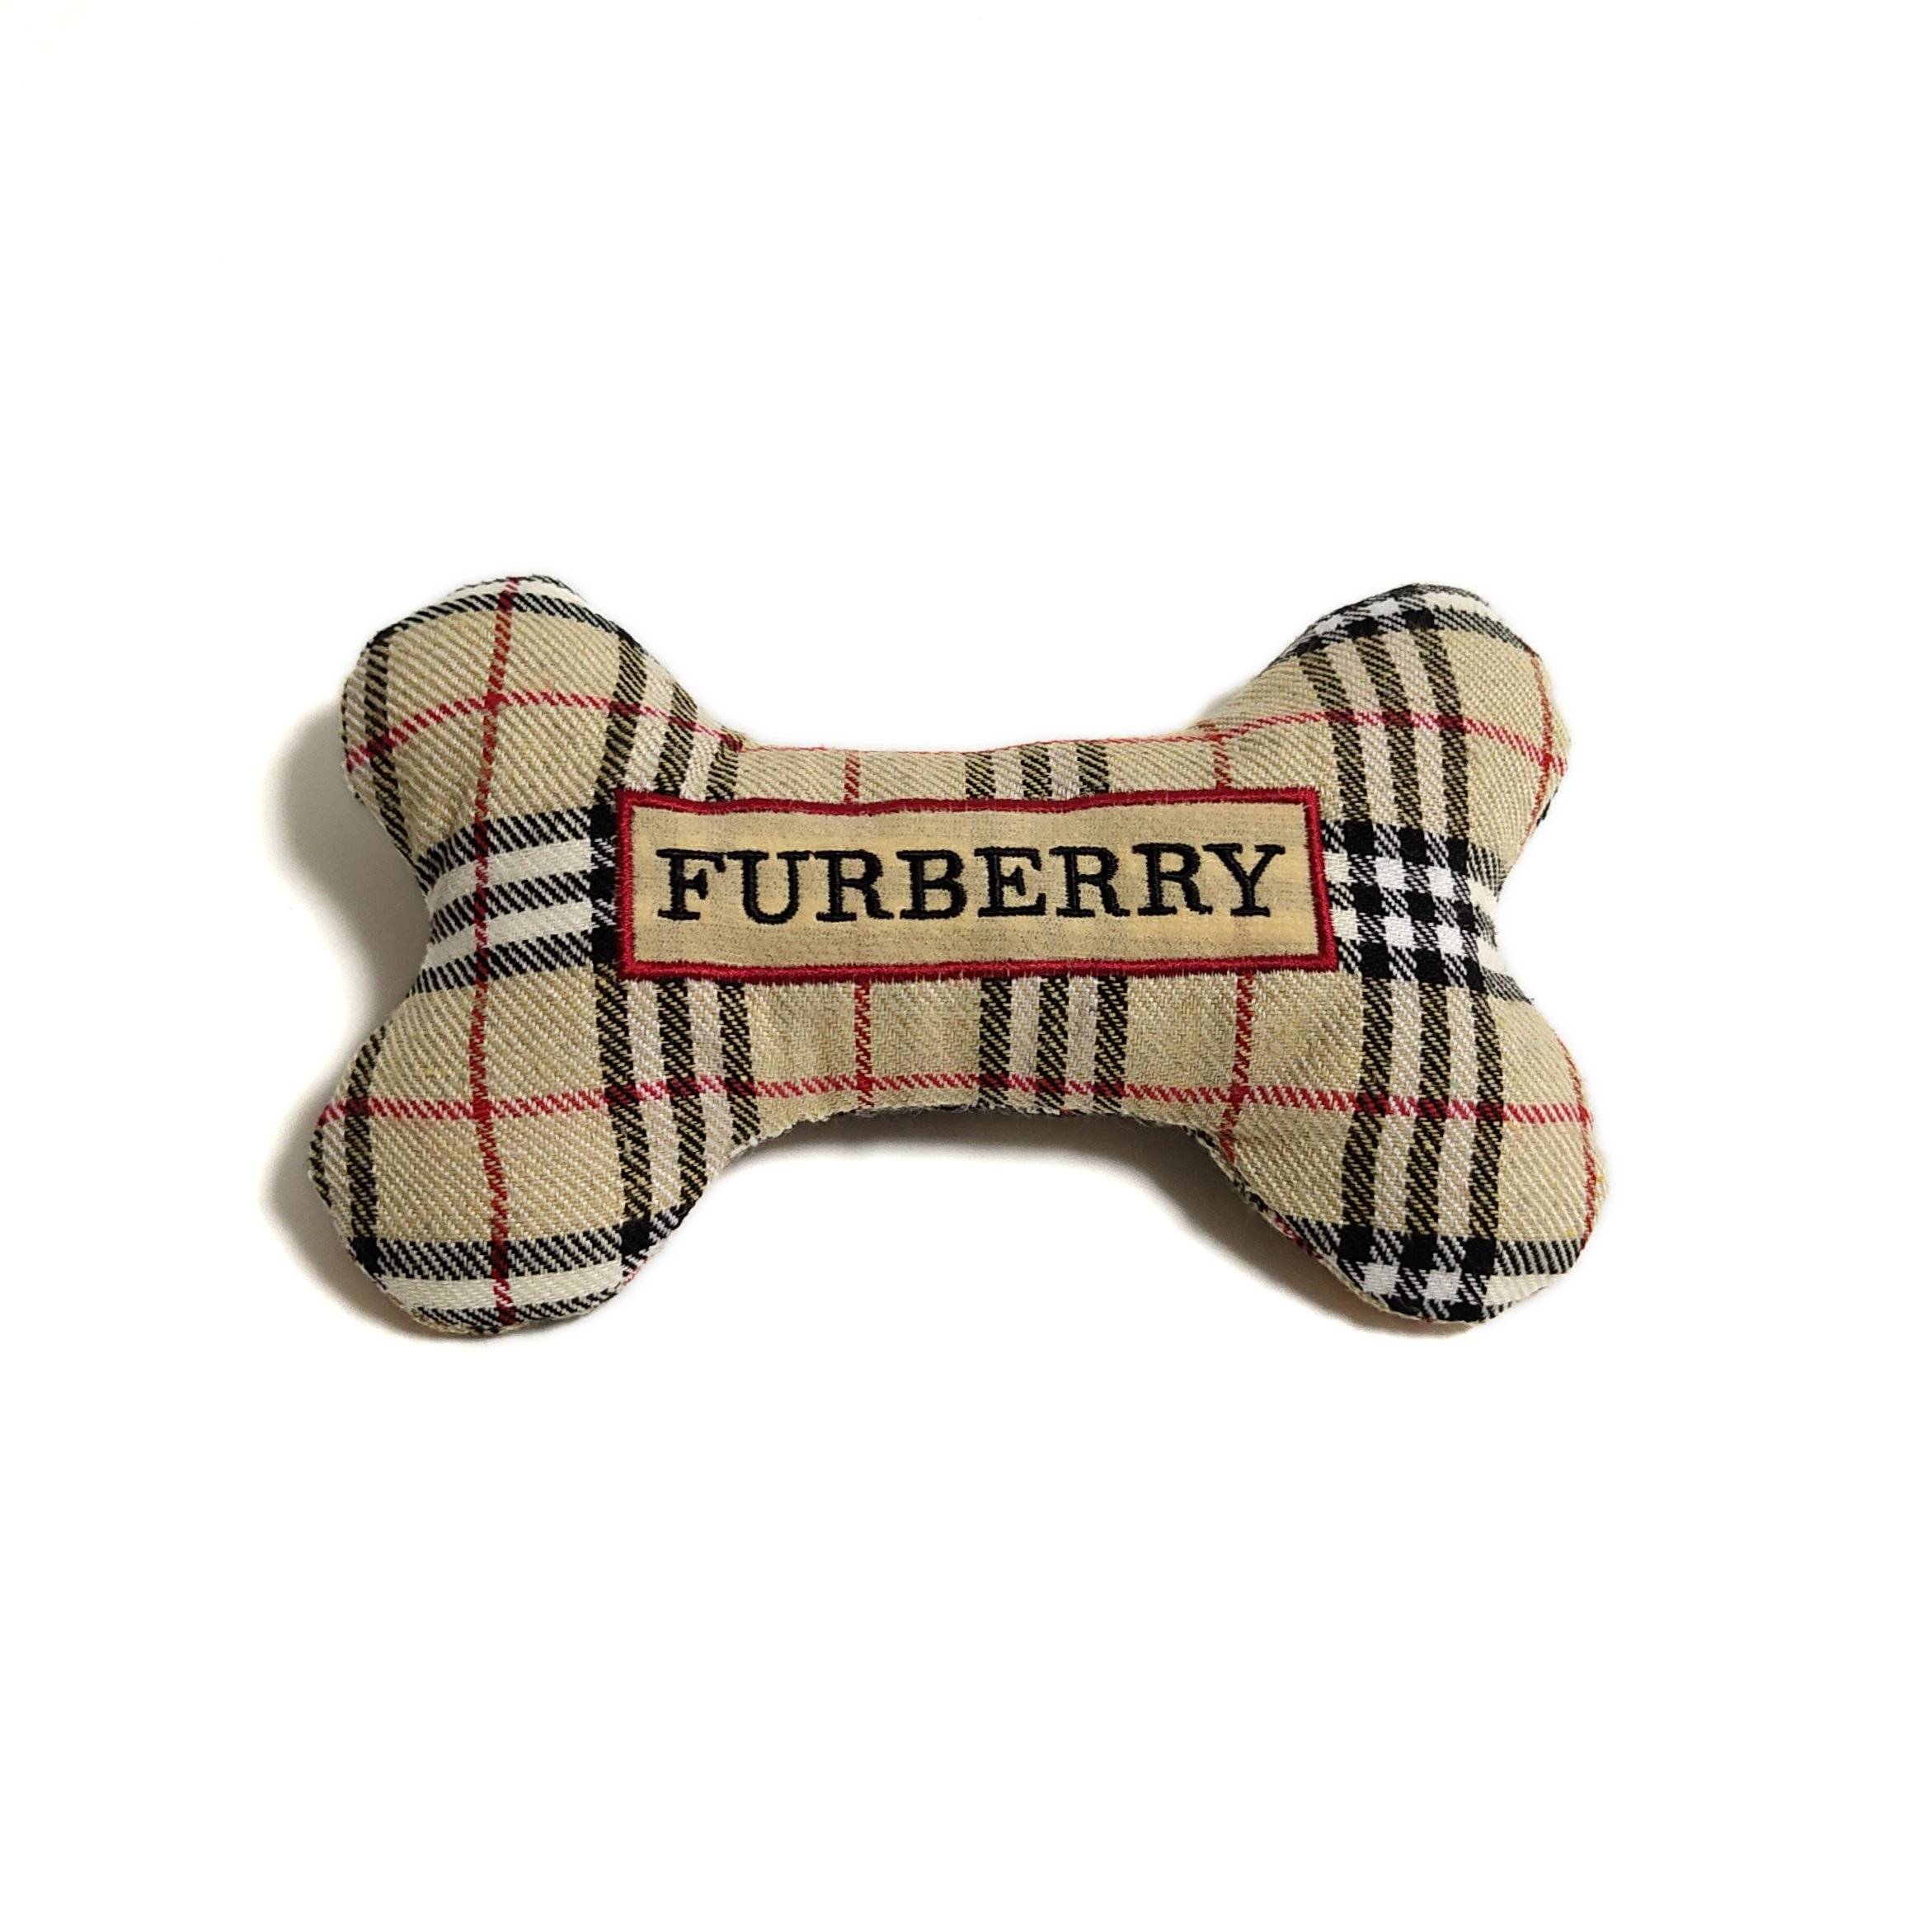 Furberry Dog Bone